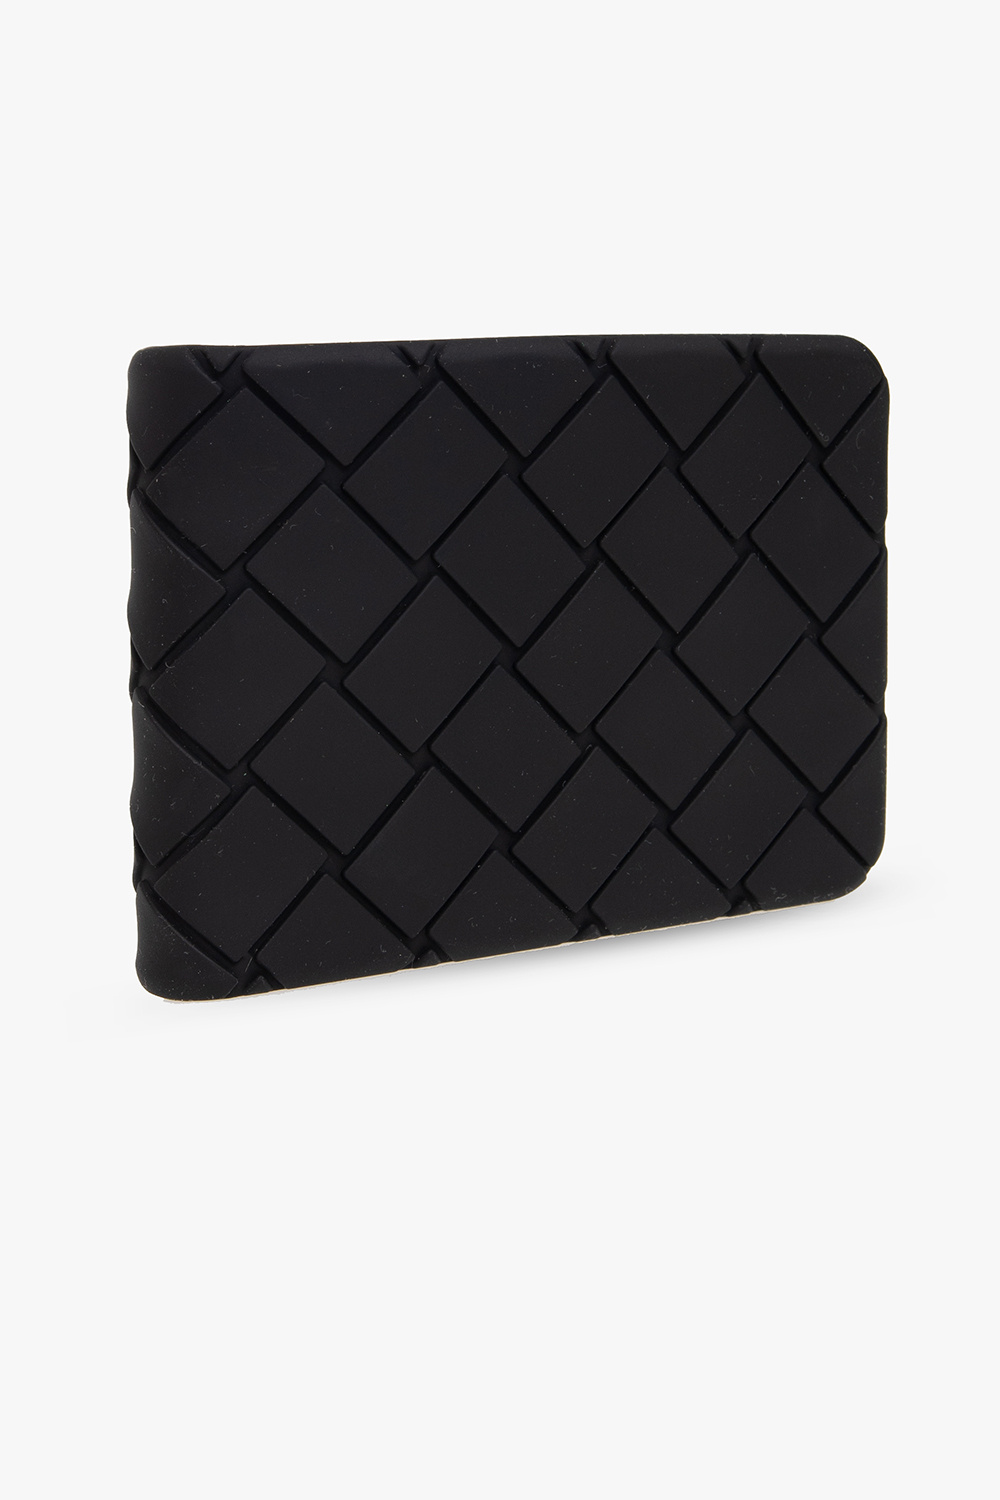 Bottega Veneta Folding wallet